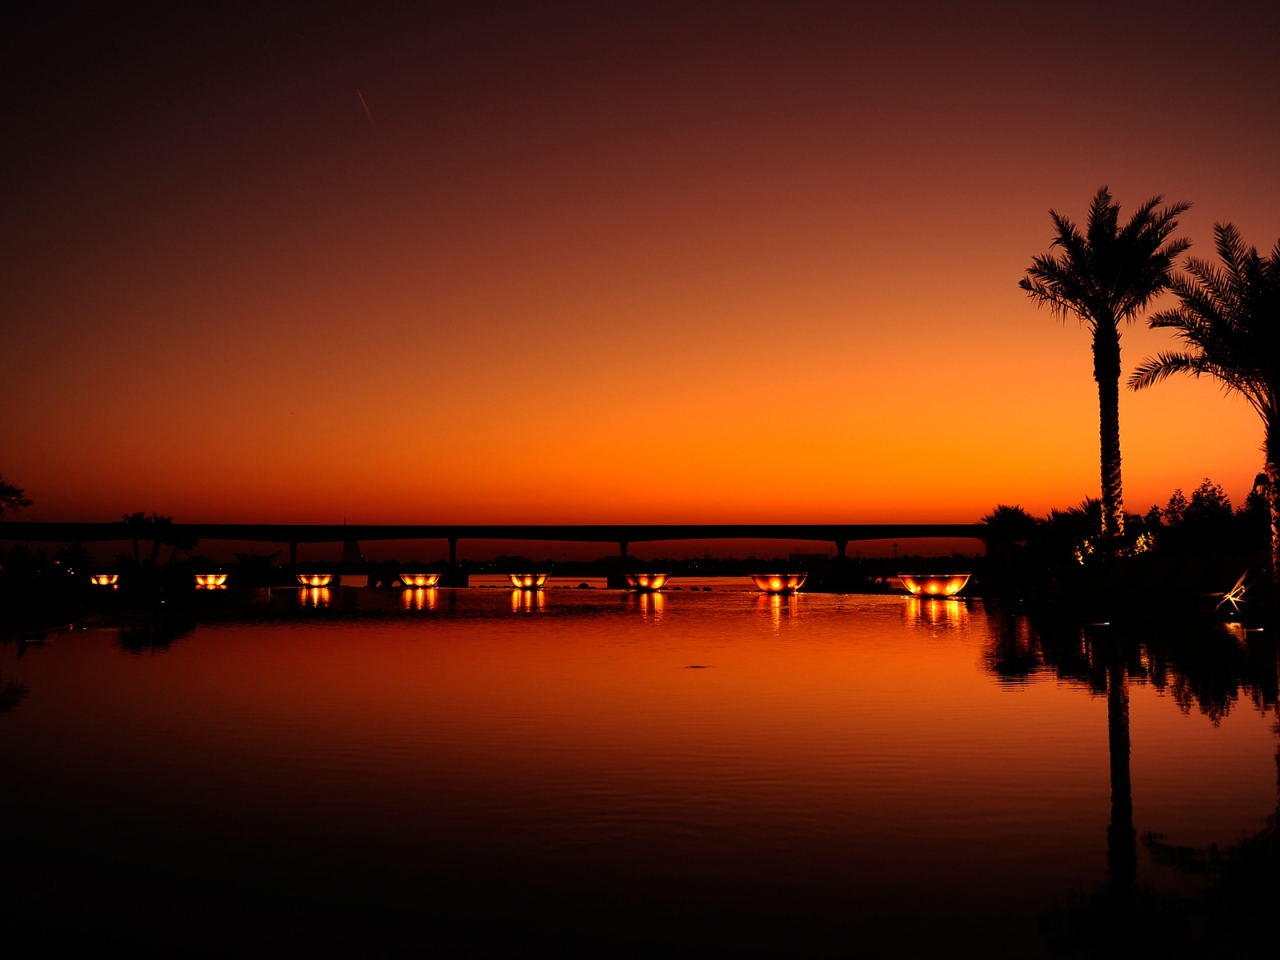 Sunset in Dubai for 1280 x 960 resolution